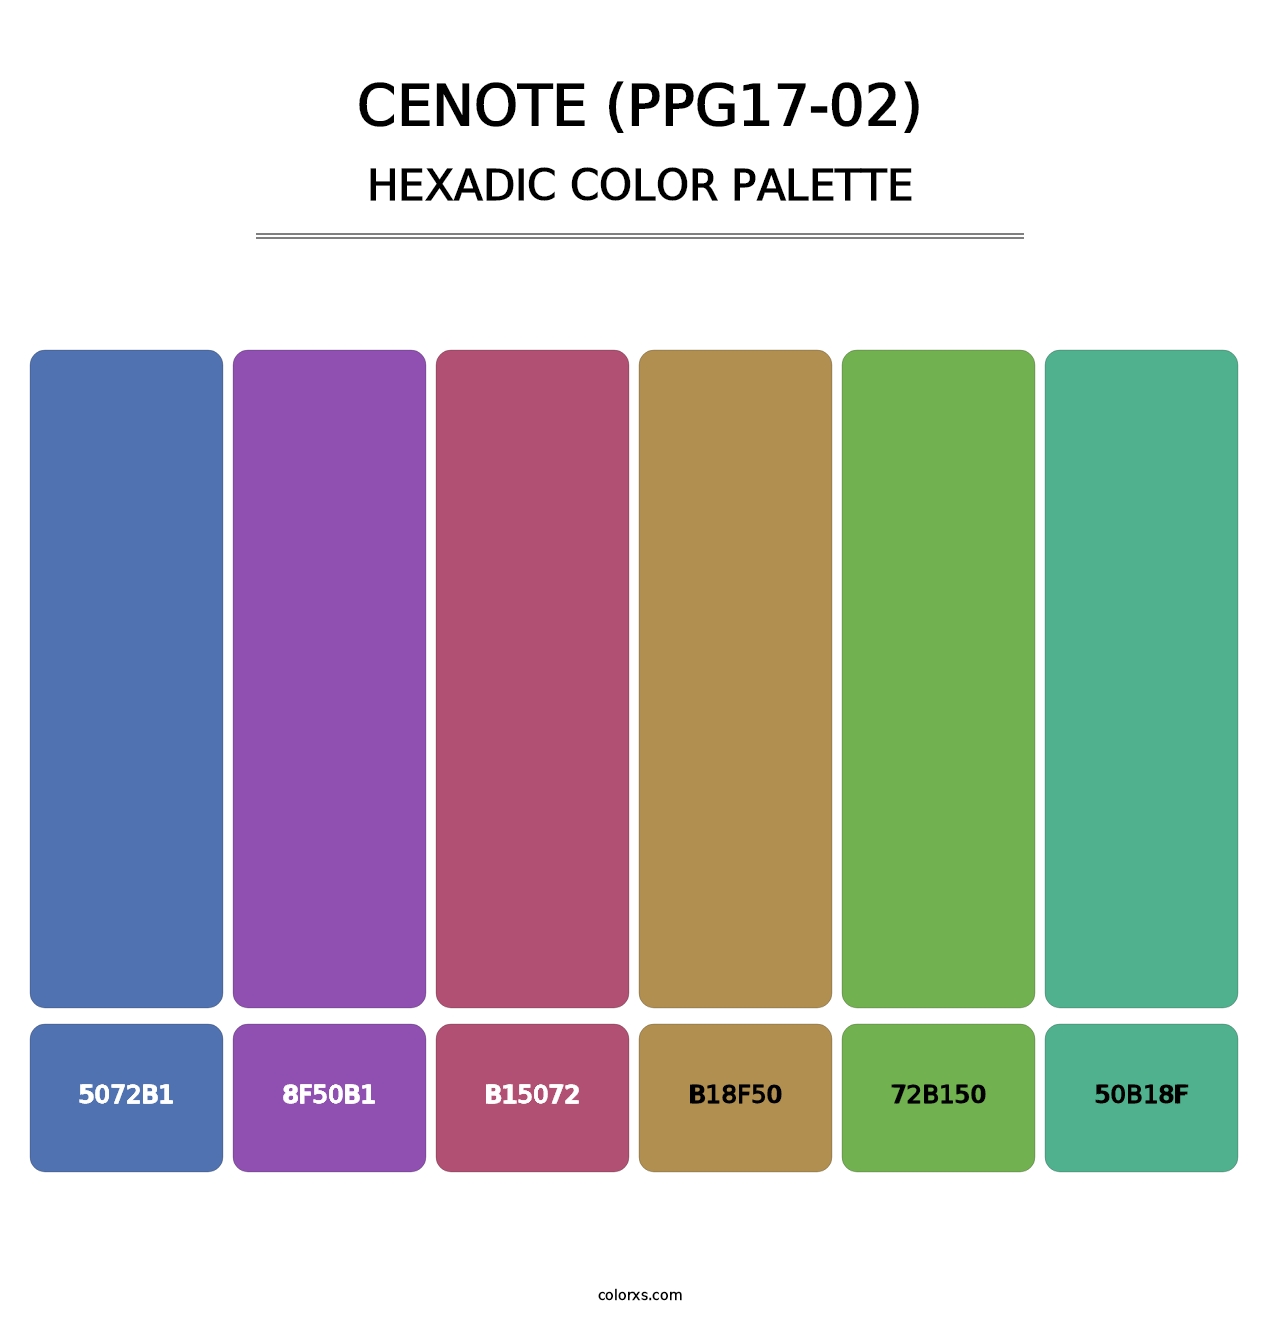 Cenote (PPG17-02) - Hexadic Color Palette